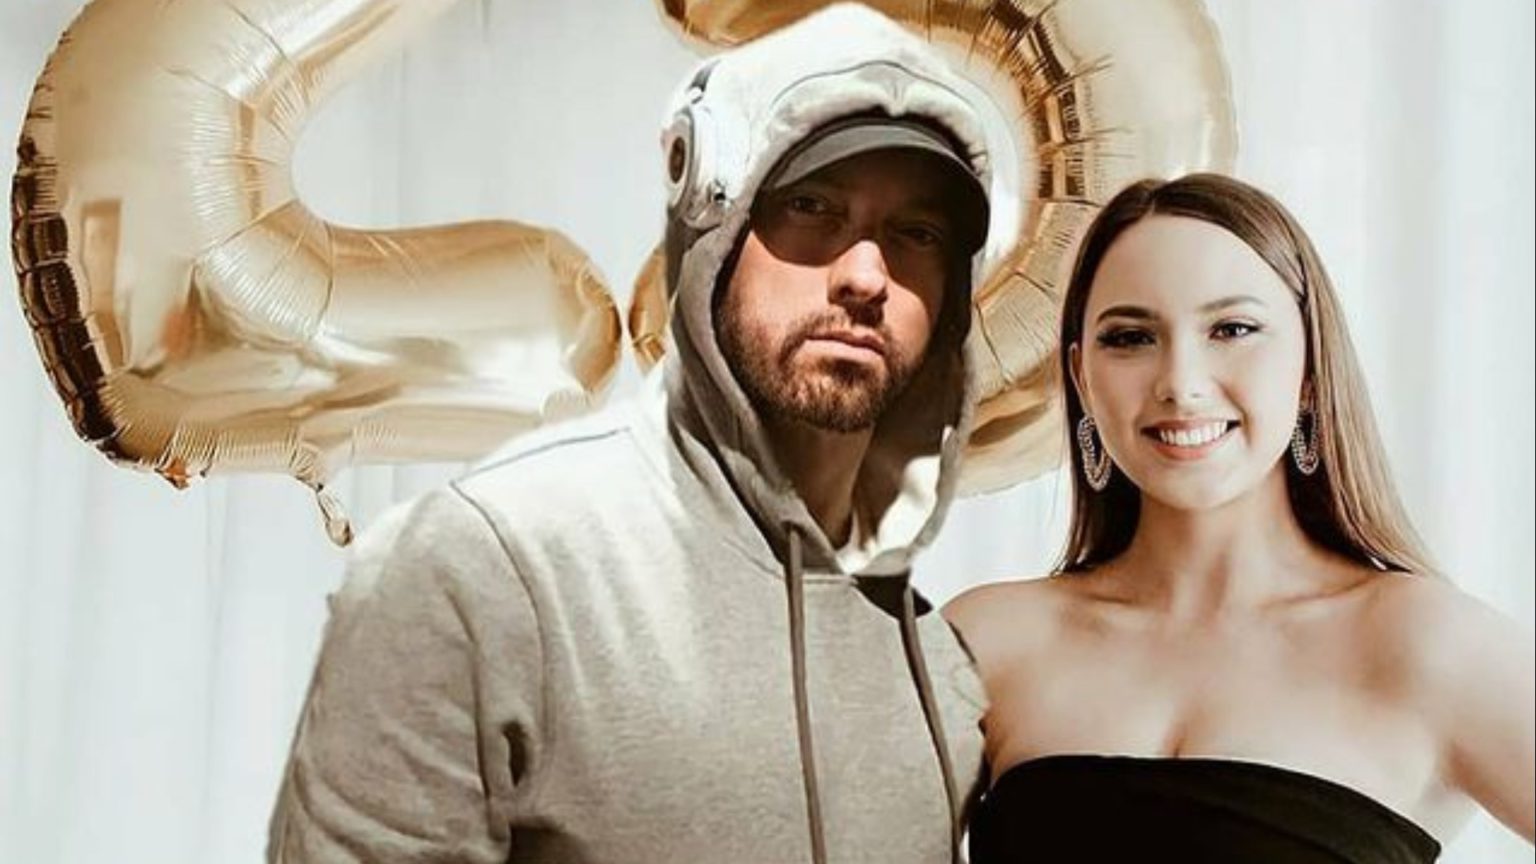 Where Is Rapper Eminem’s Daughter Hailie Now? | Popcornews